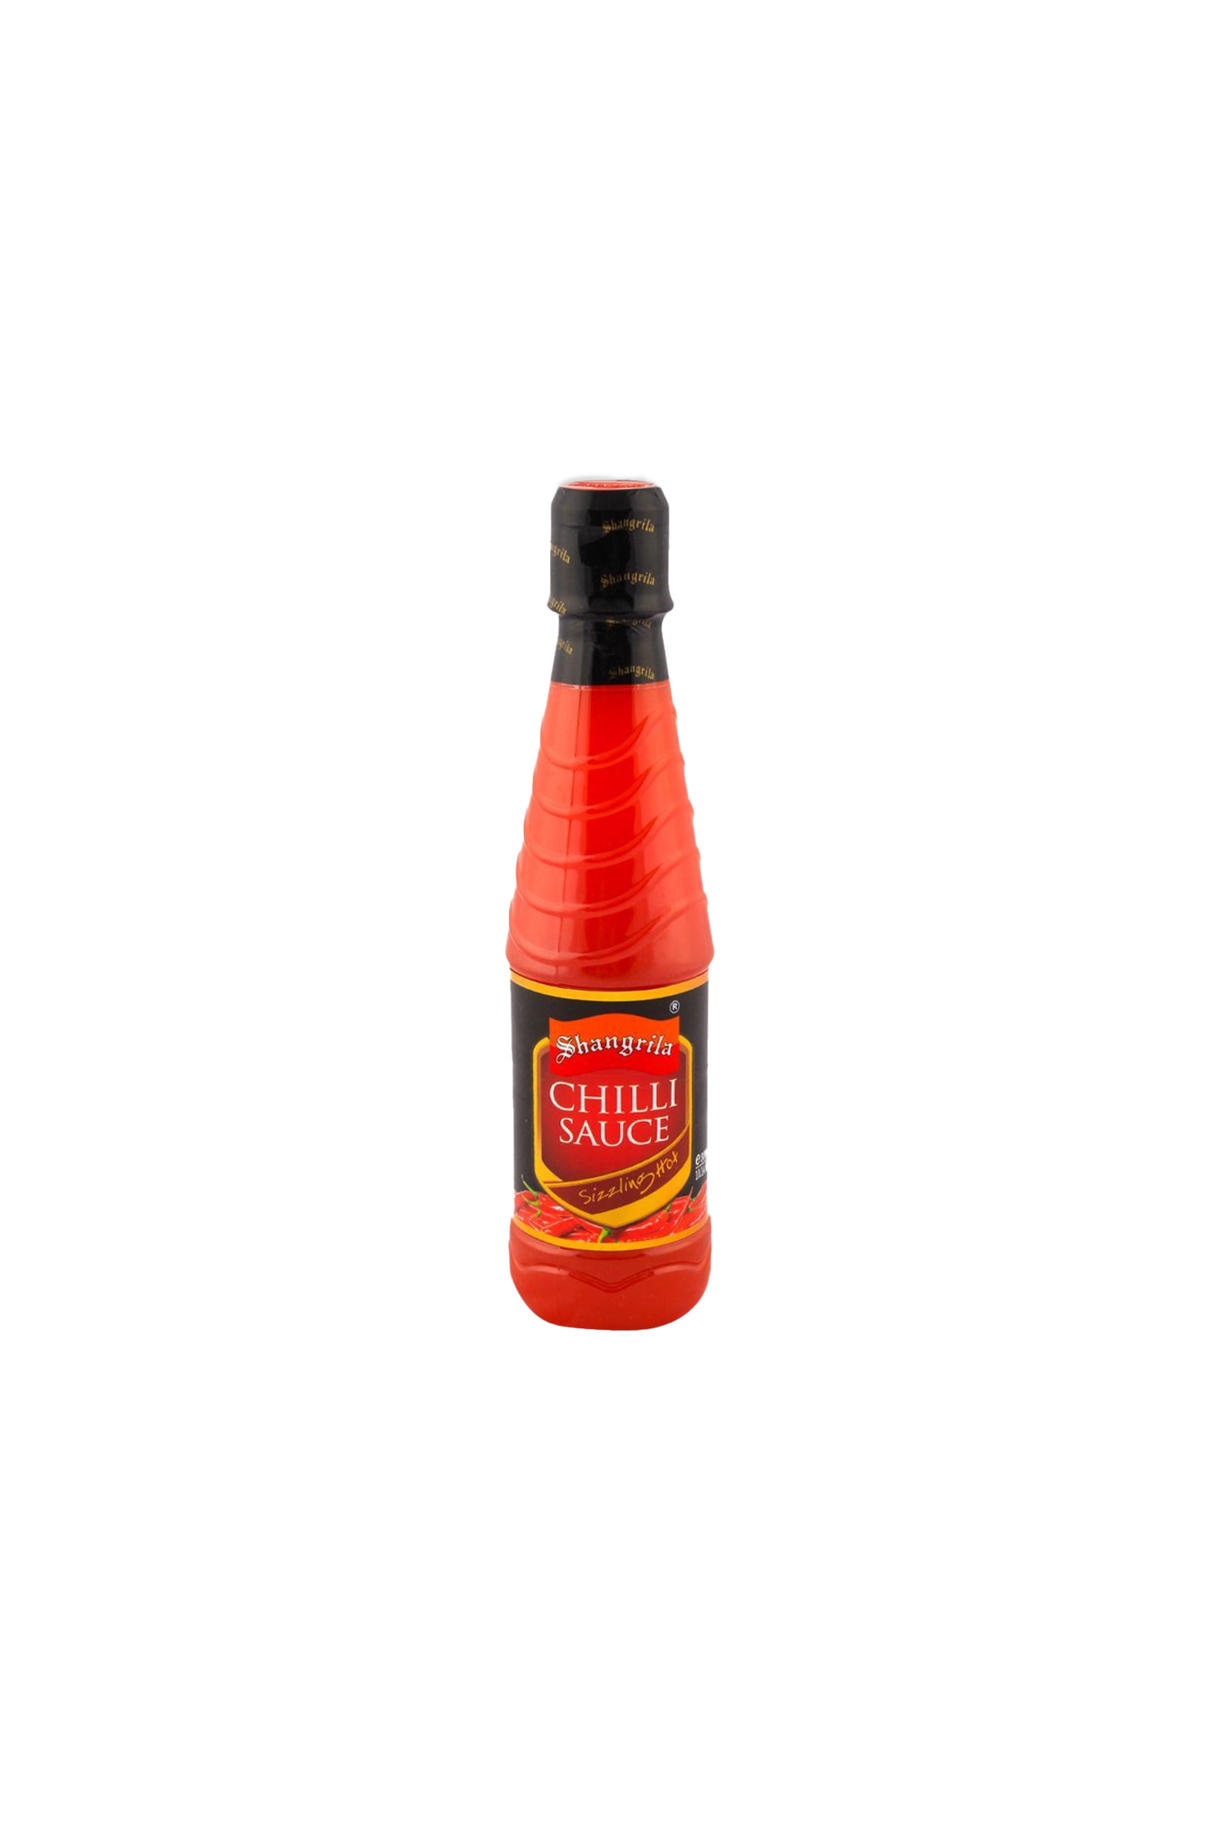 shangrila chilli sauce 275ml